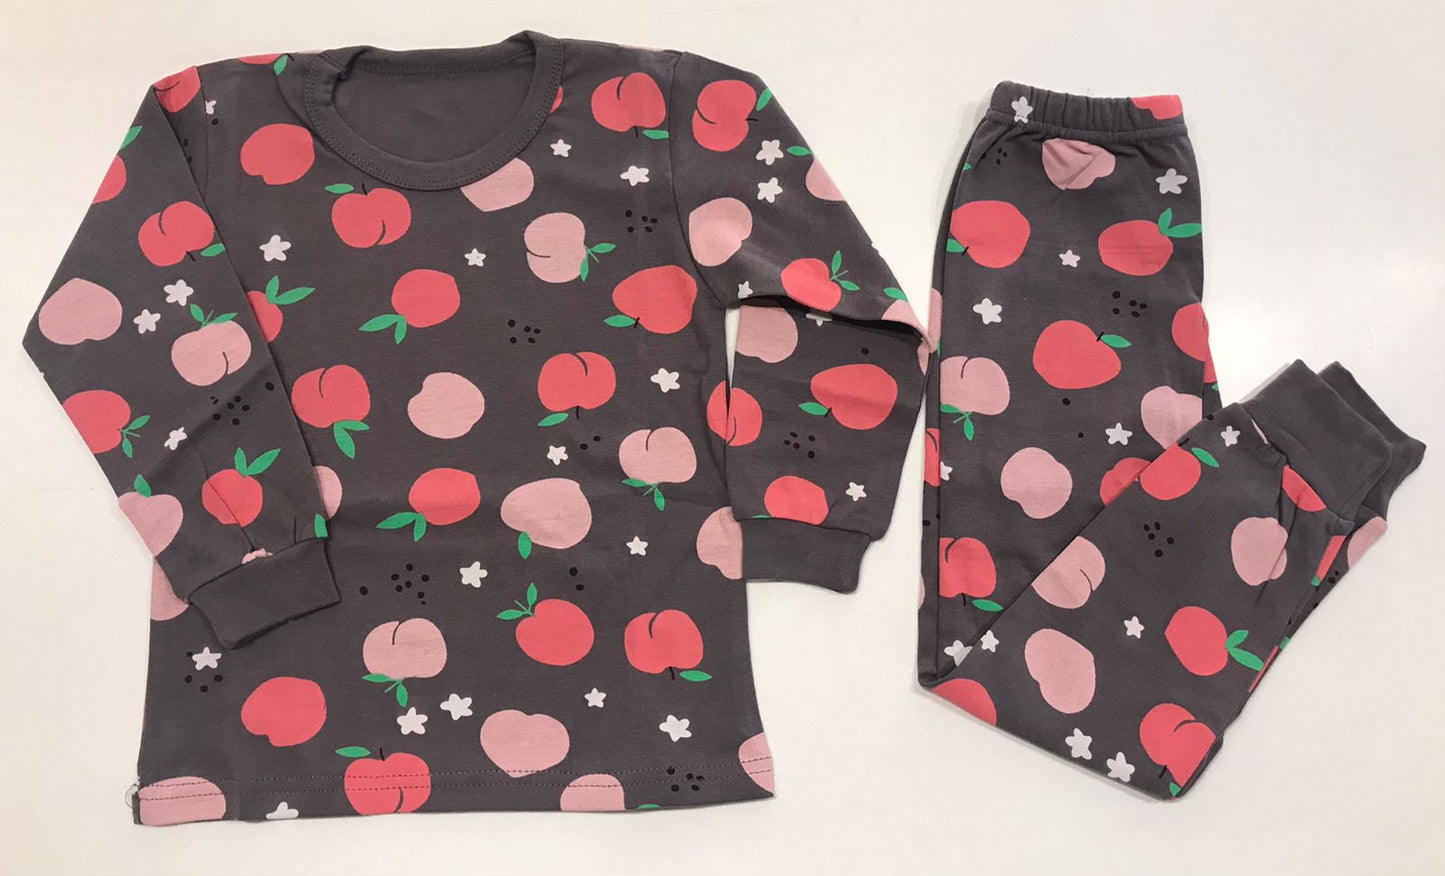 Colorful Patterns Children's Sleepwear Pajama Apple Print